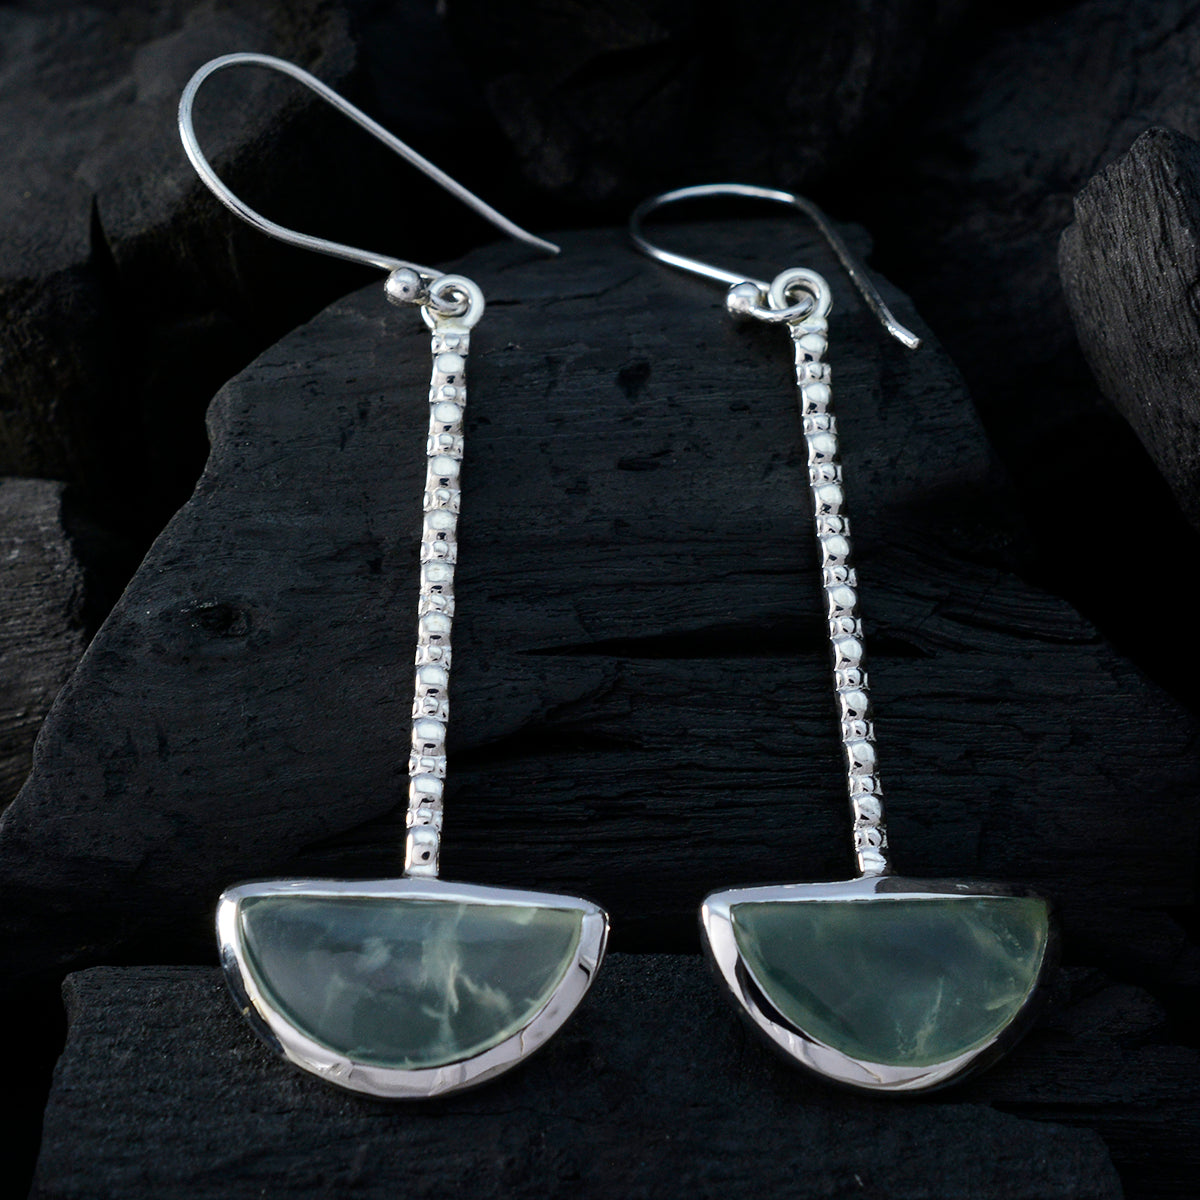 Riyo Good Gemstones fancy Cabochon Light Green Prehnite Silver Earrings gift for mother